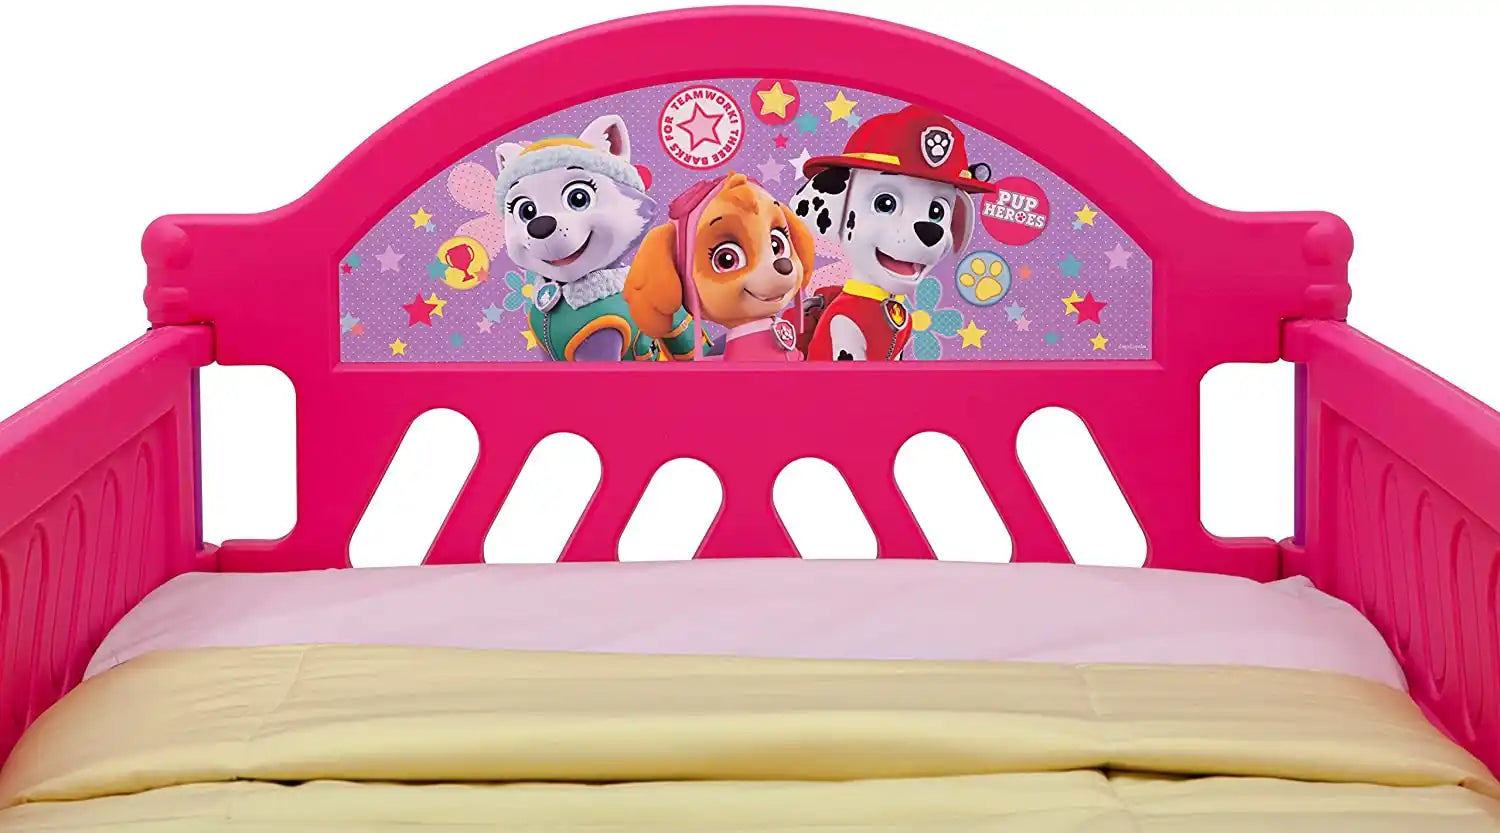 Delta Children - Paw Patrol Plastic 3d Footboard Toddler Bed W/ Guardrail (Mattress Included)